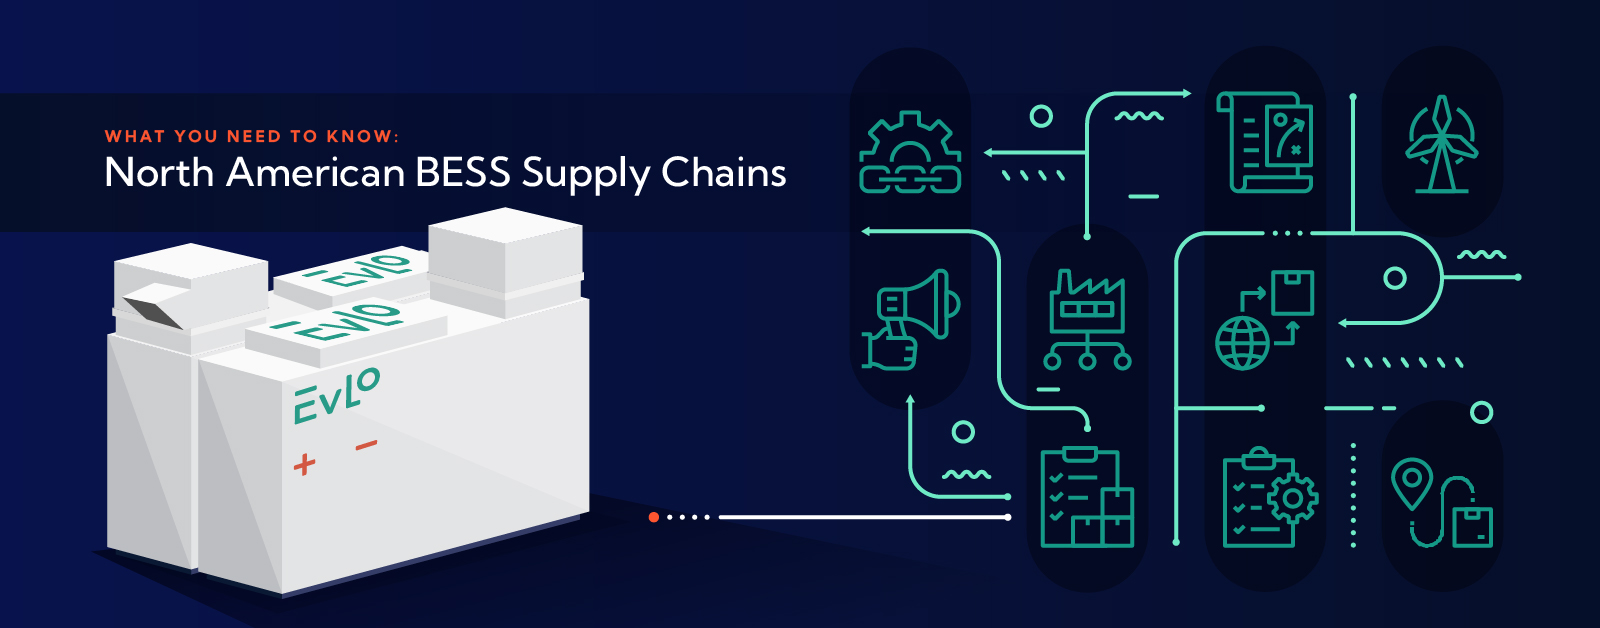 bess-supply-chains